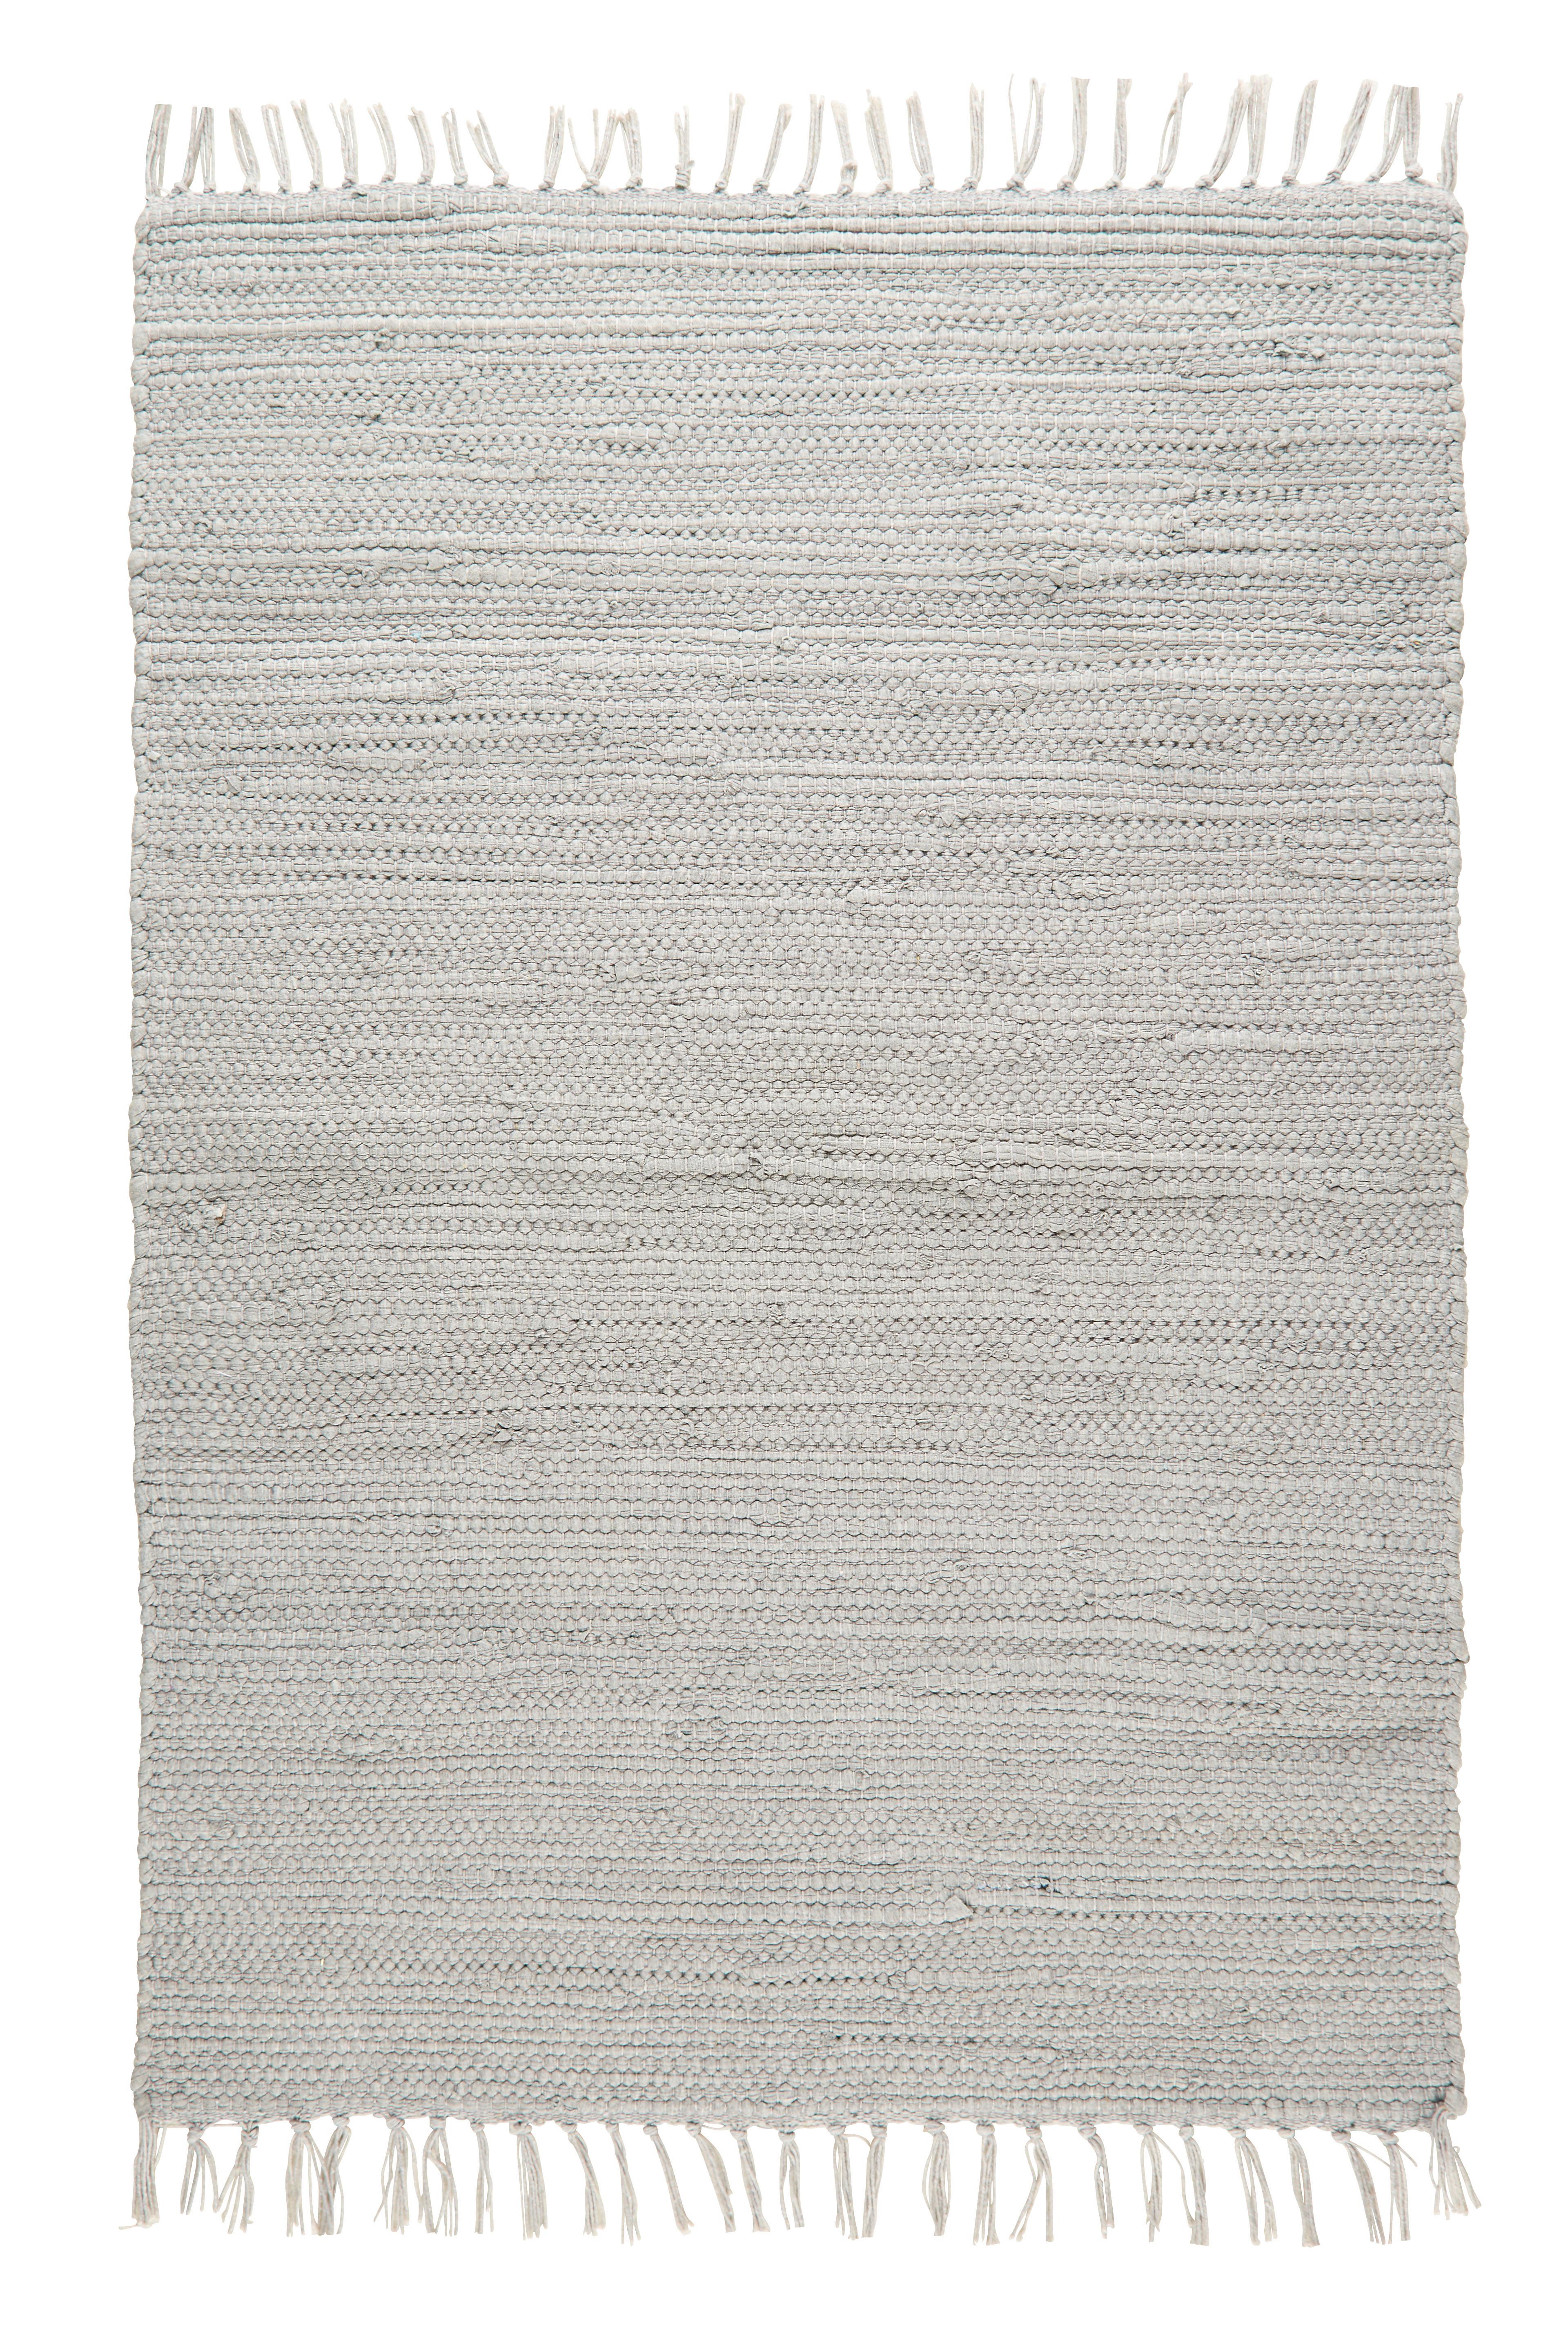 Covor din cârpe Julia 2 - gri, Romantik / Landhaus, textil (70/130cm) - Modern Living